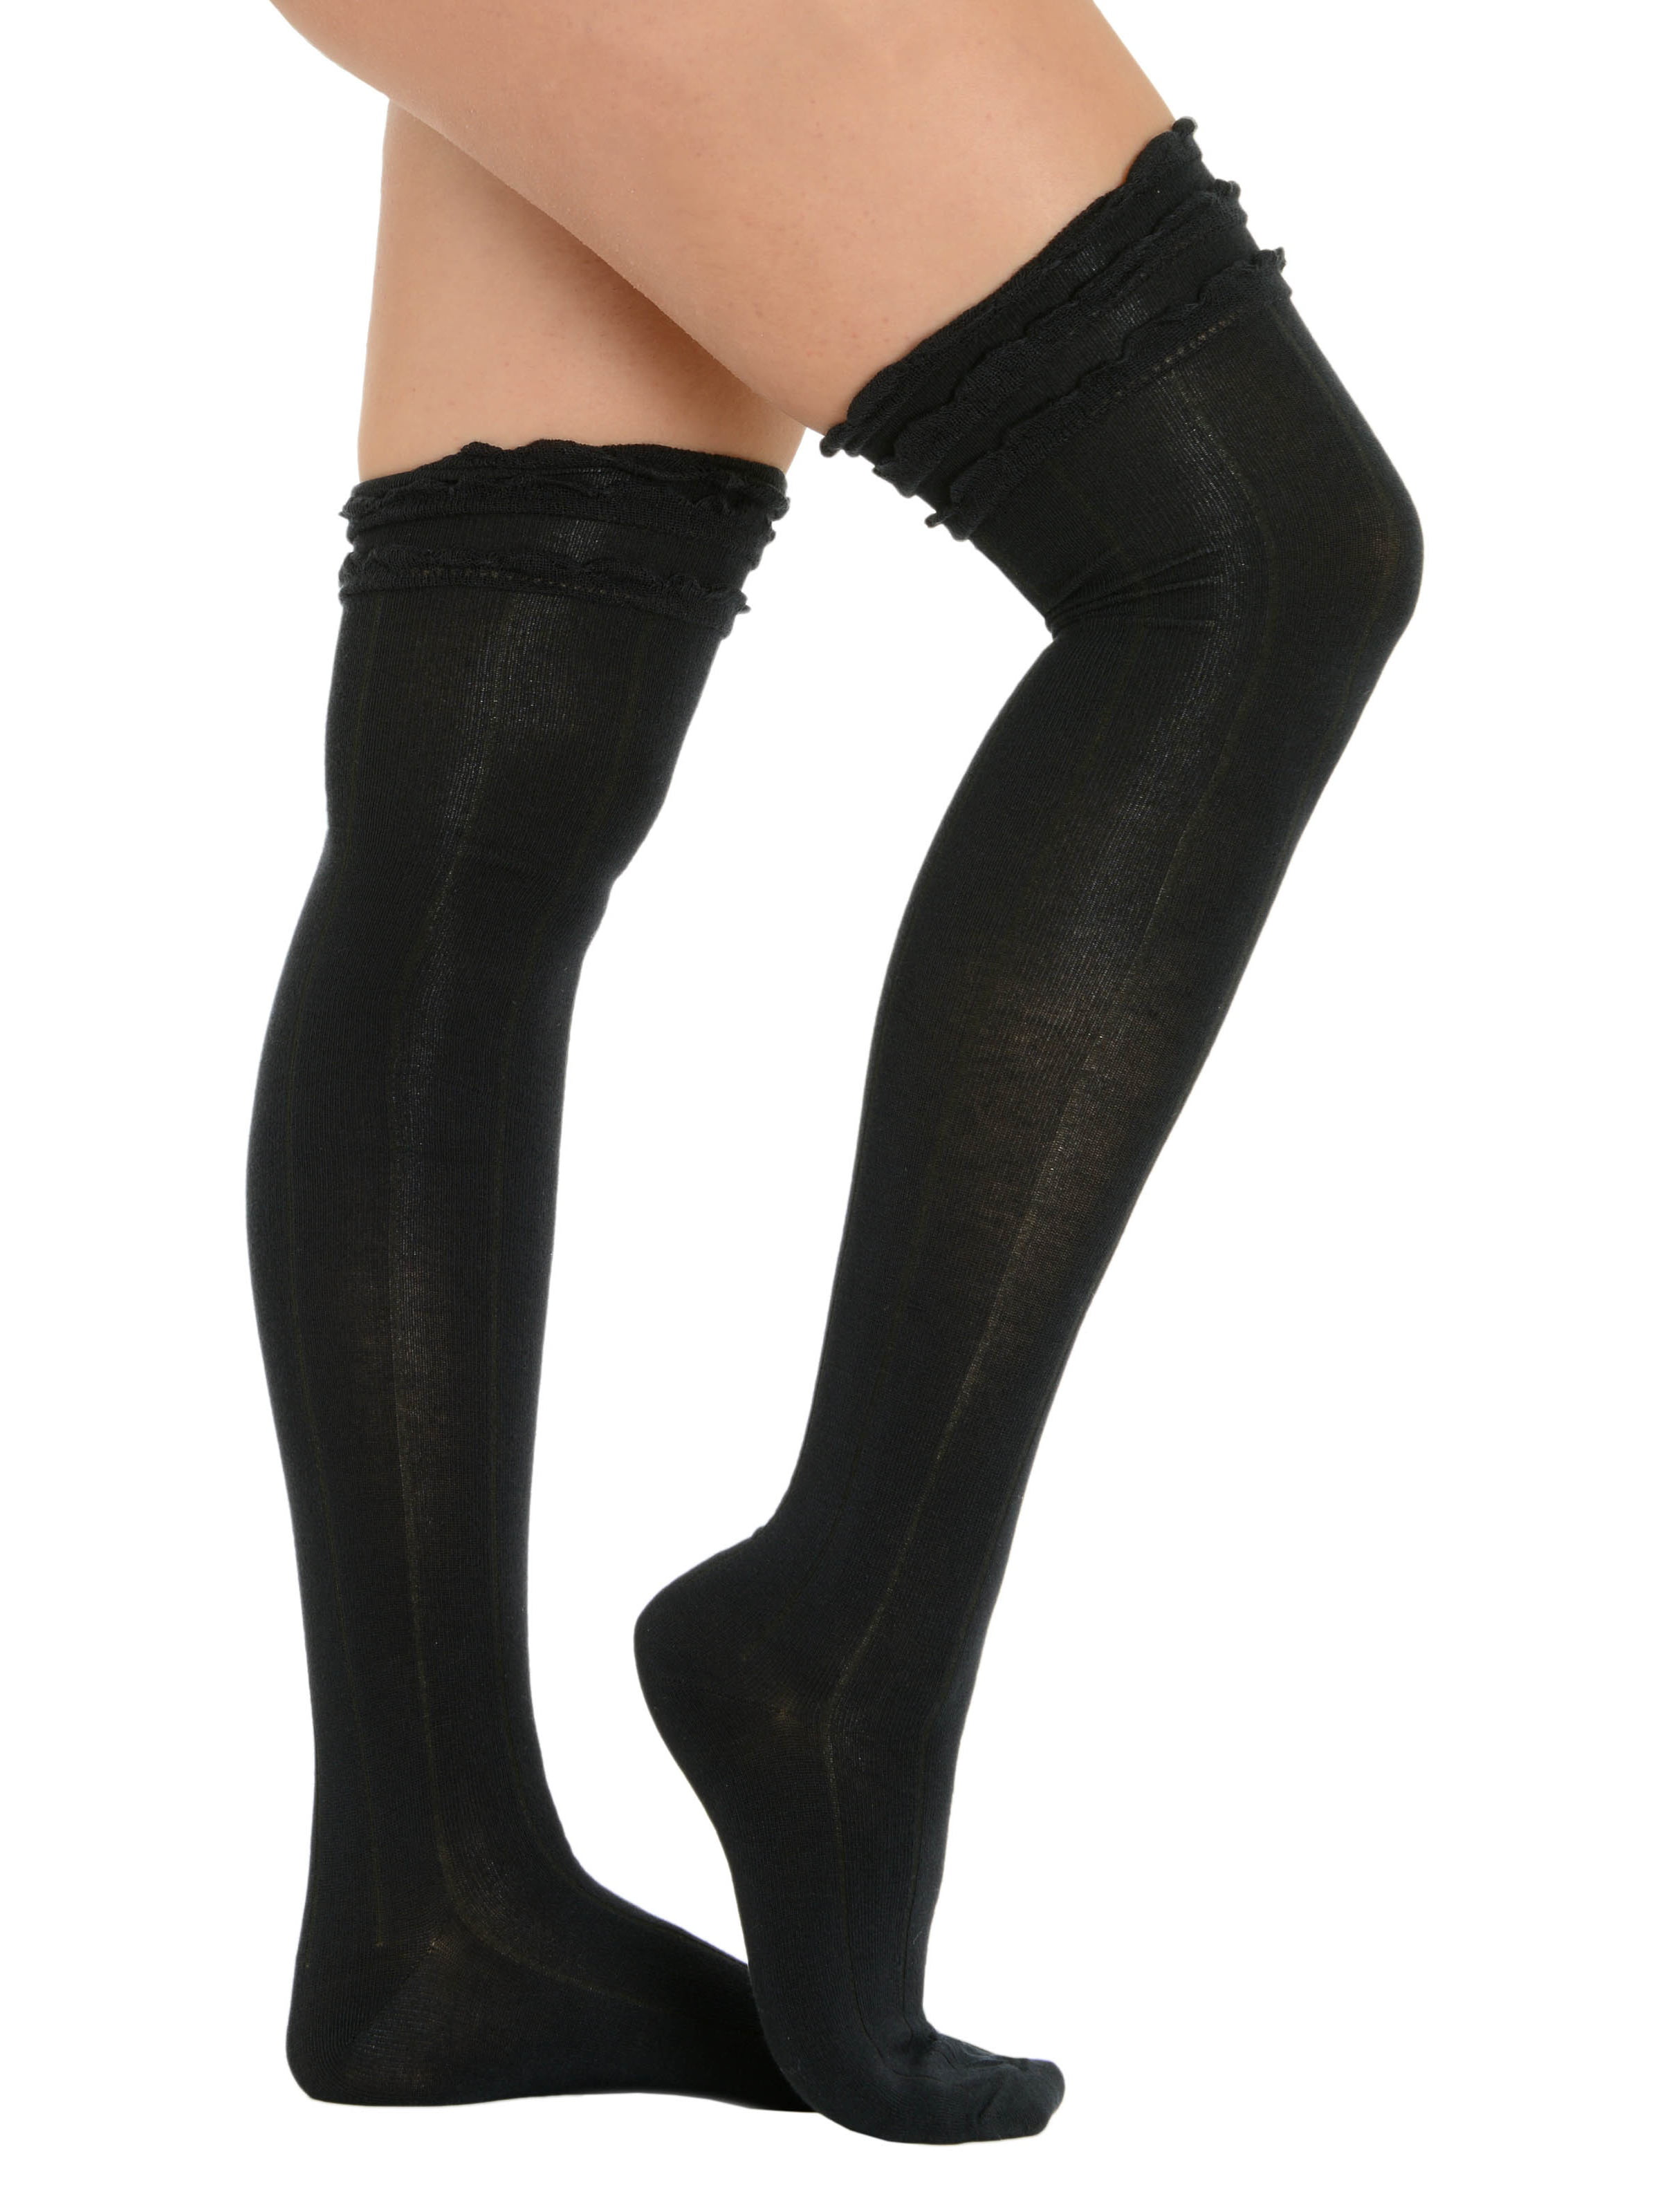 K Bell Socks Over The Knee Black Ruffle Socks Fine Ribbing Womens Rayon Dress Socks Walmart 